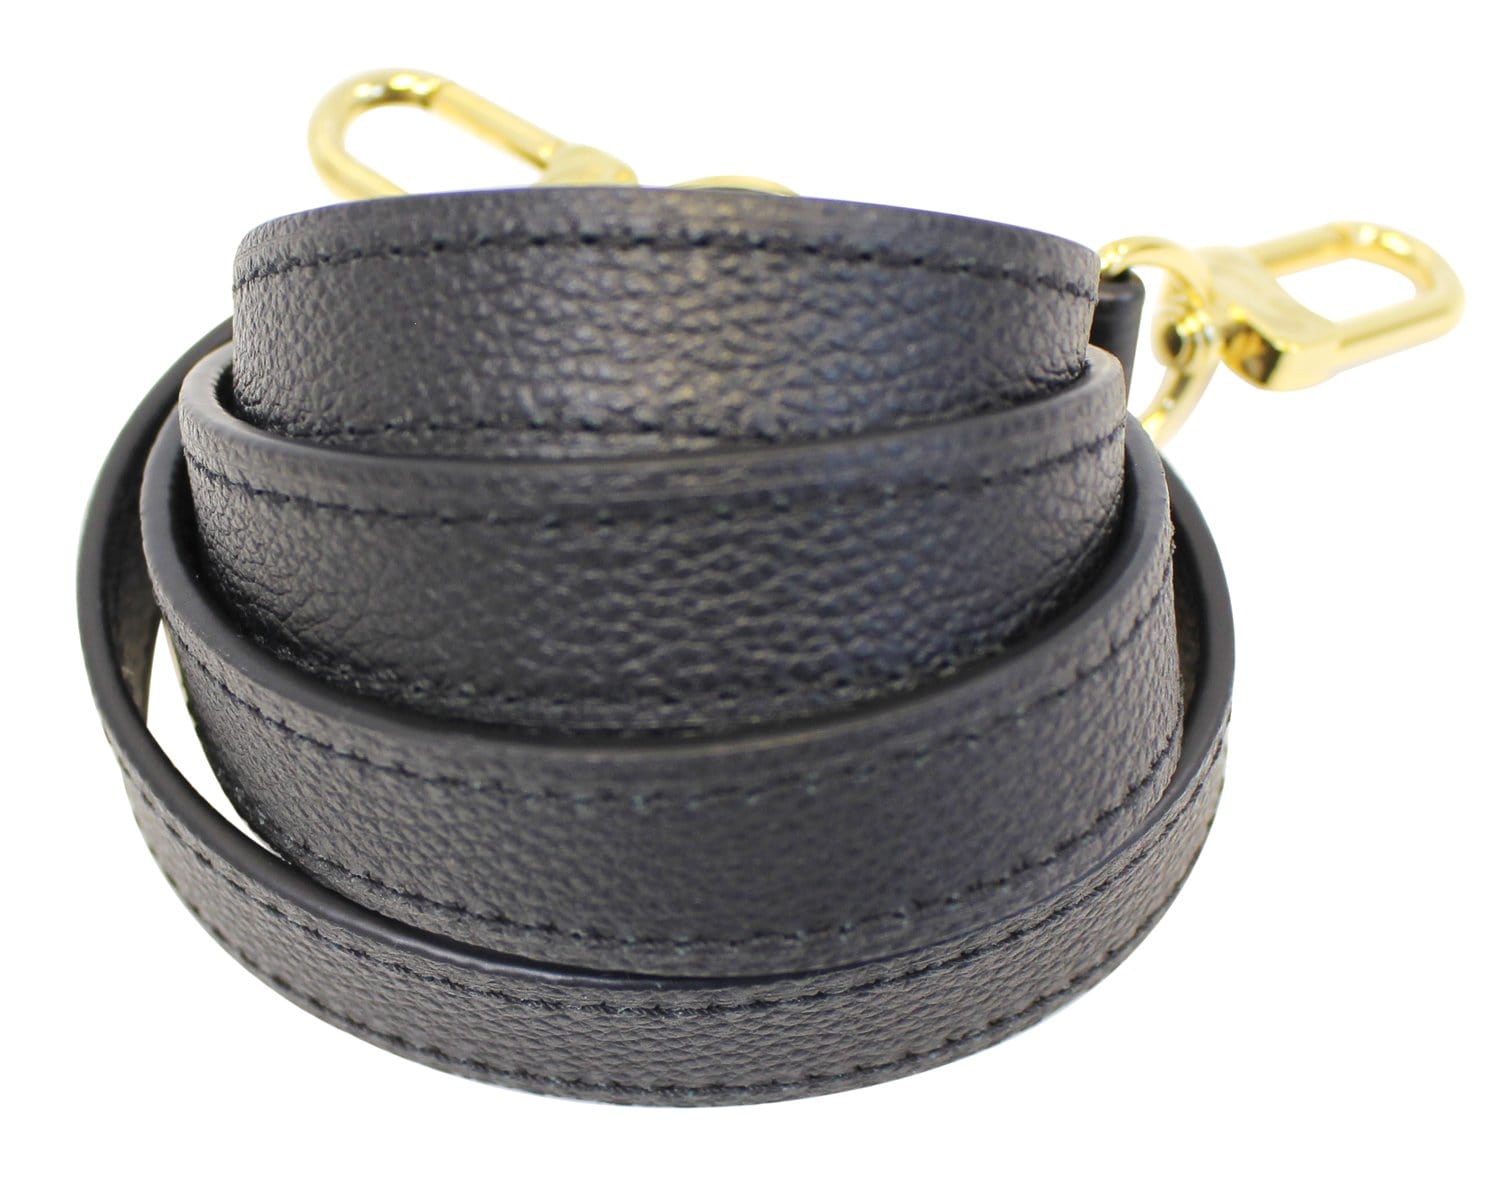 Louis Vuitton Handbag Strap Replacement — SoleHeeled